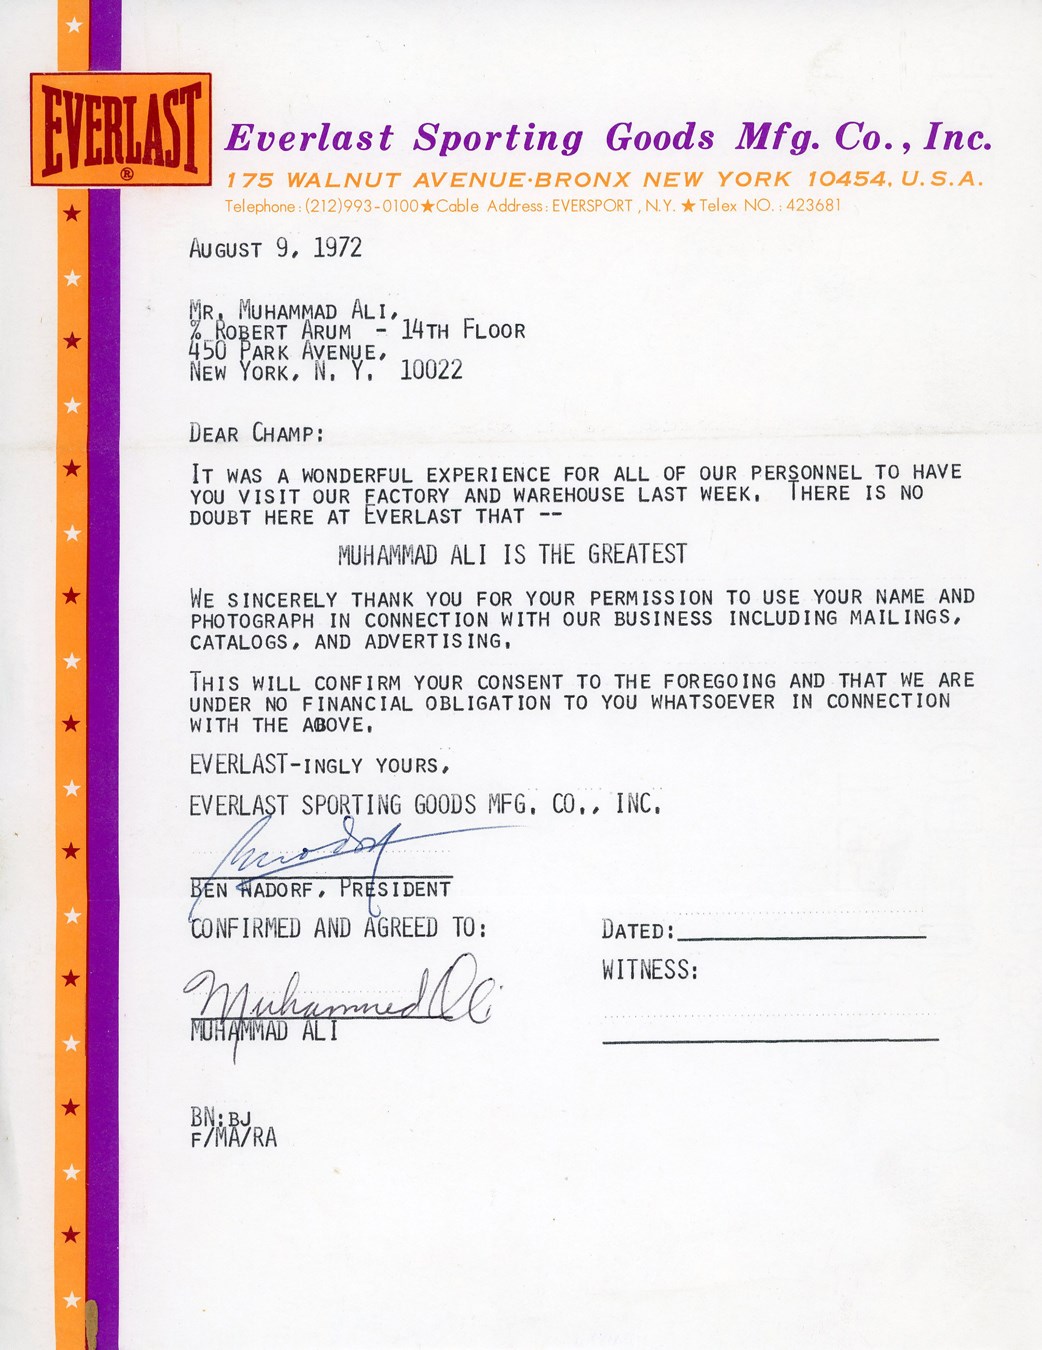 Muhammad Ali & Boxing - Muhammad Ali Signed Agreement With Everlast (1972) - PSA LOA